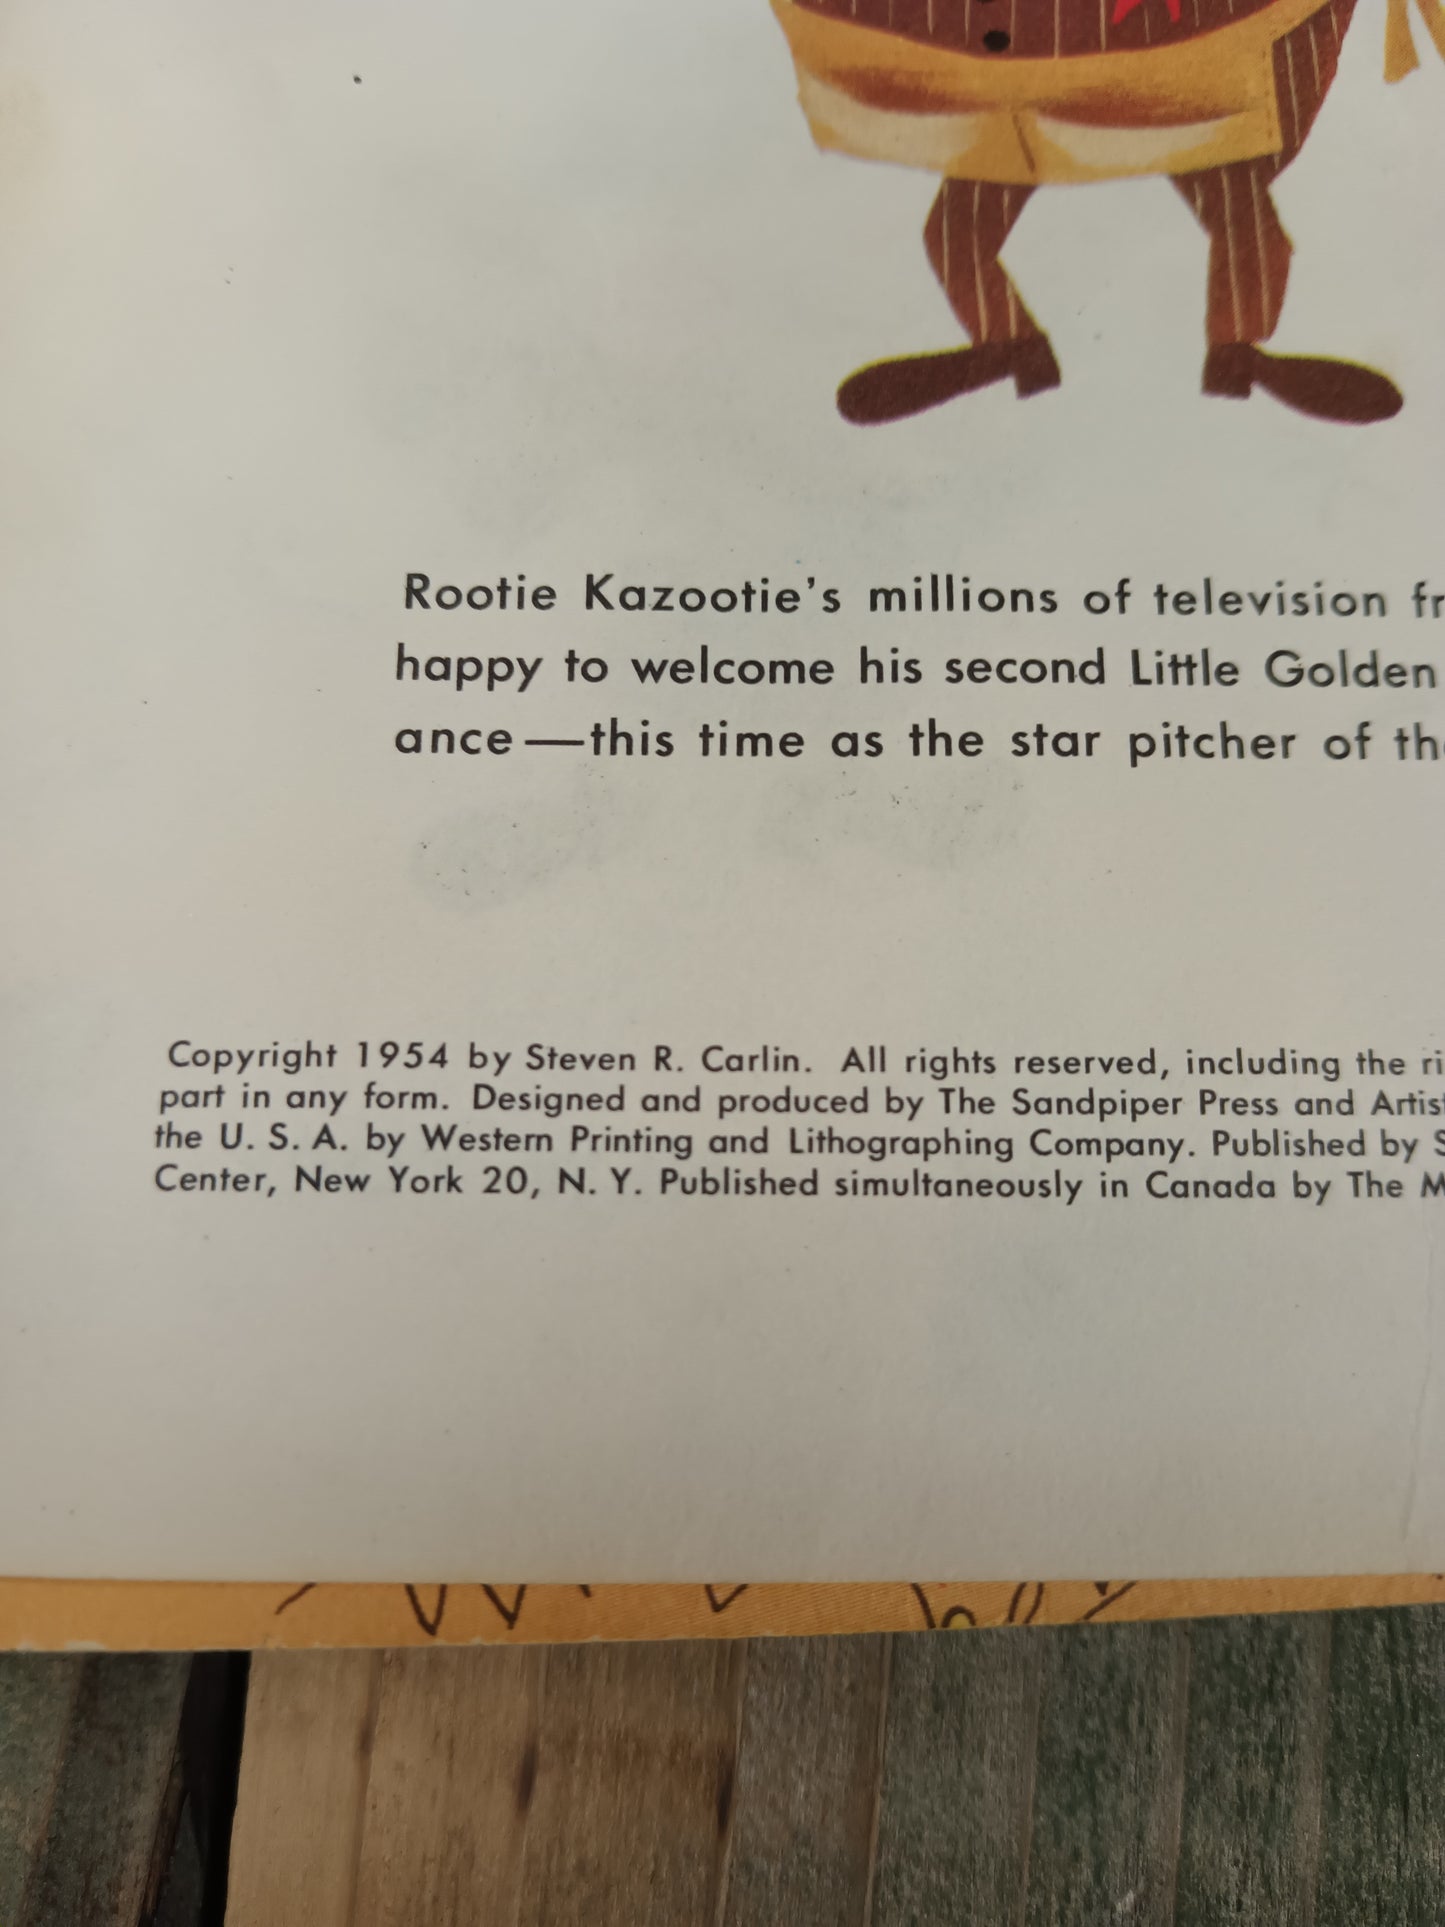 Little Golden Book Rootie Kazootie Baseball Star